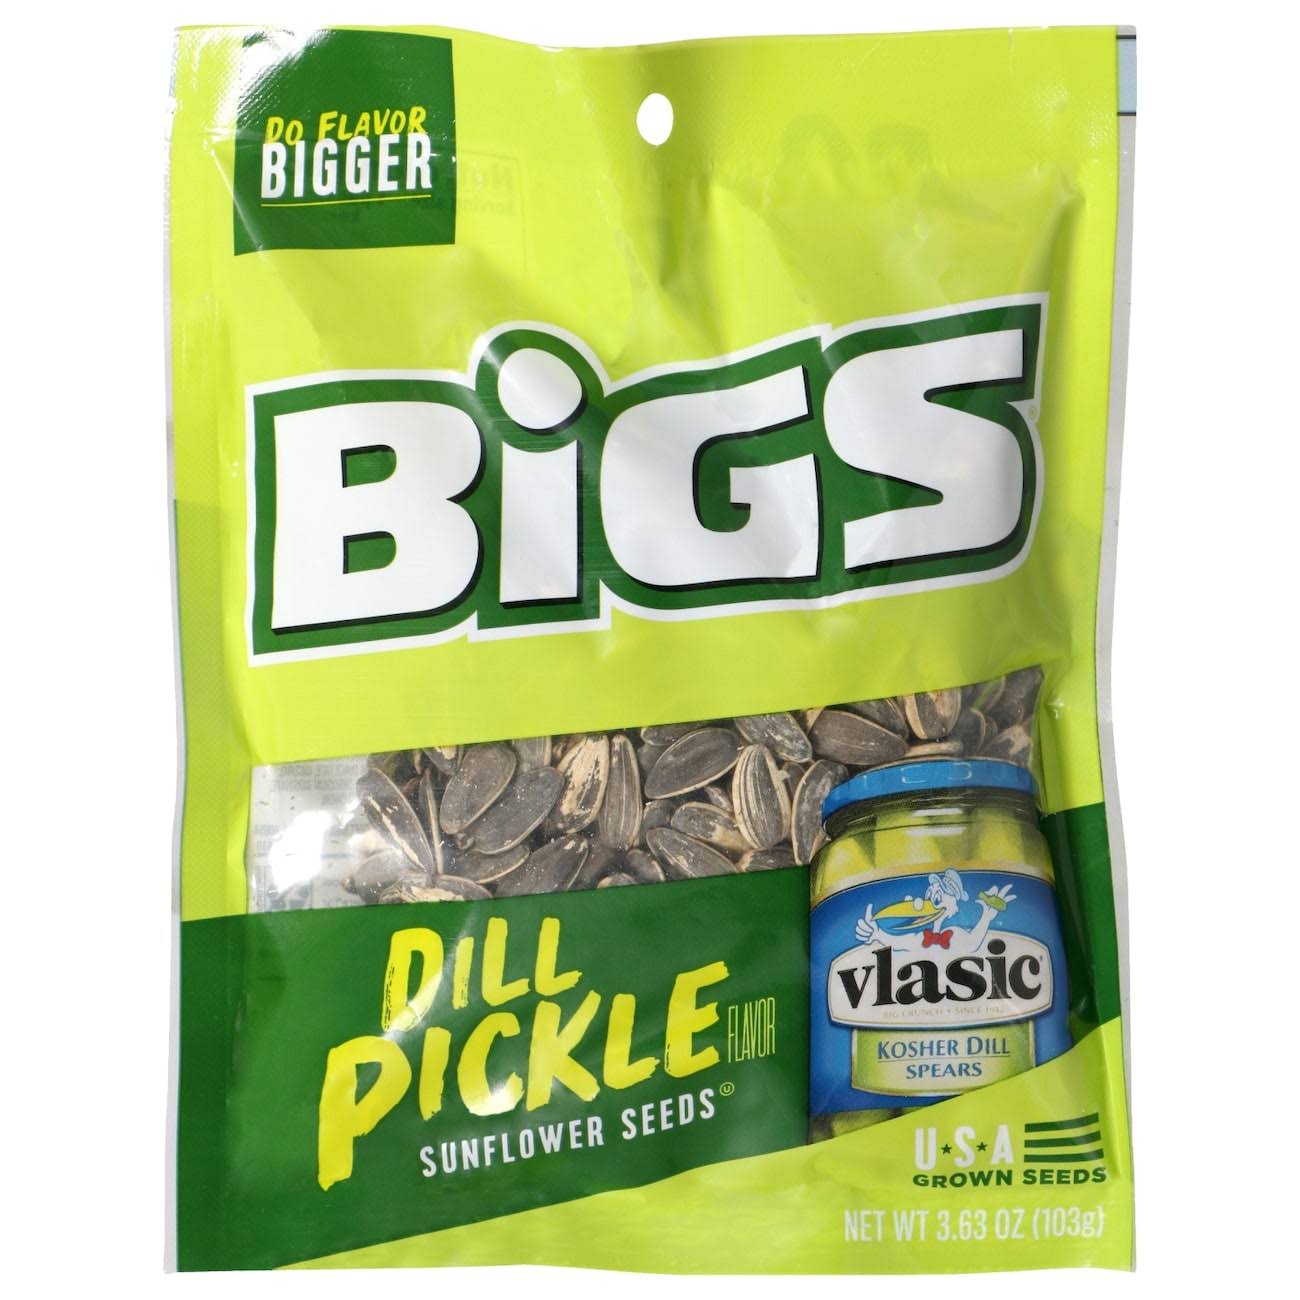 Bigs Sunflower Seeds - Dill Pickle - 5.35 oz